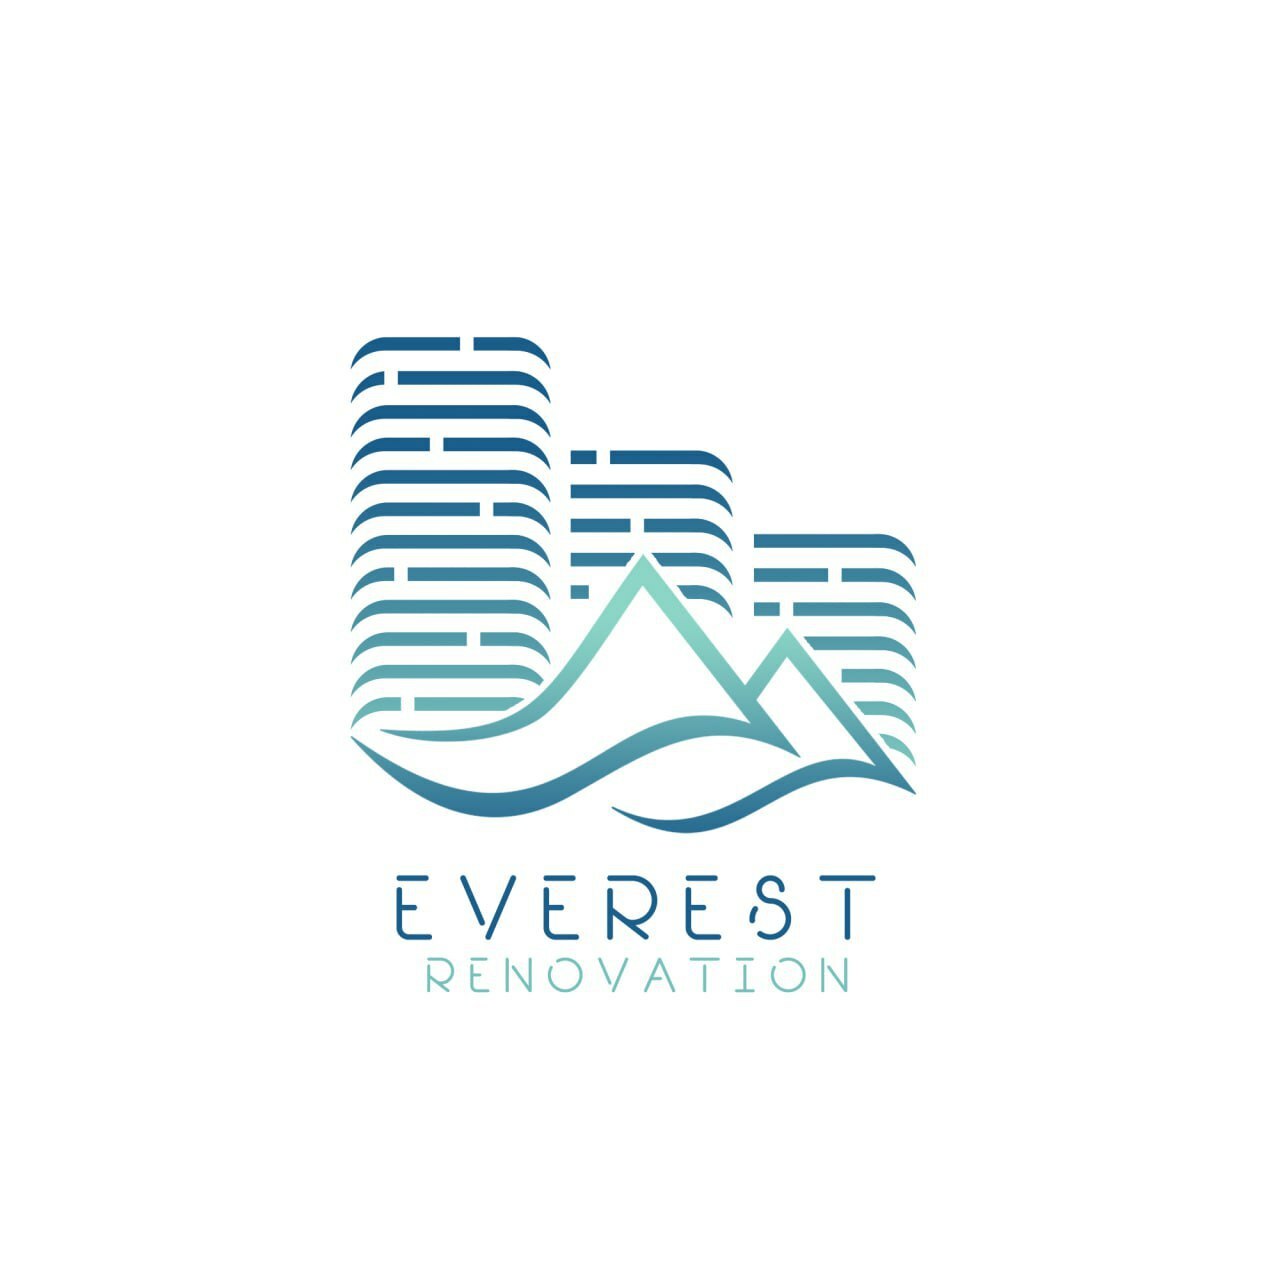 everest renovation's logo